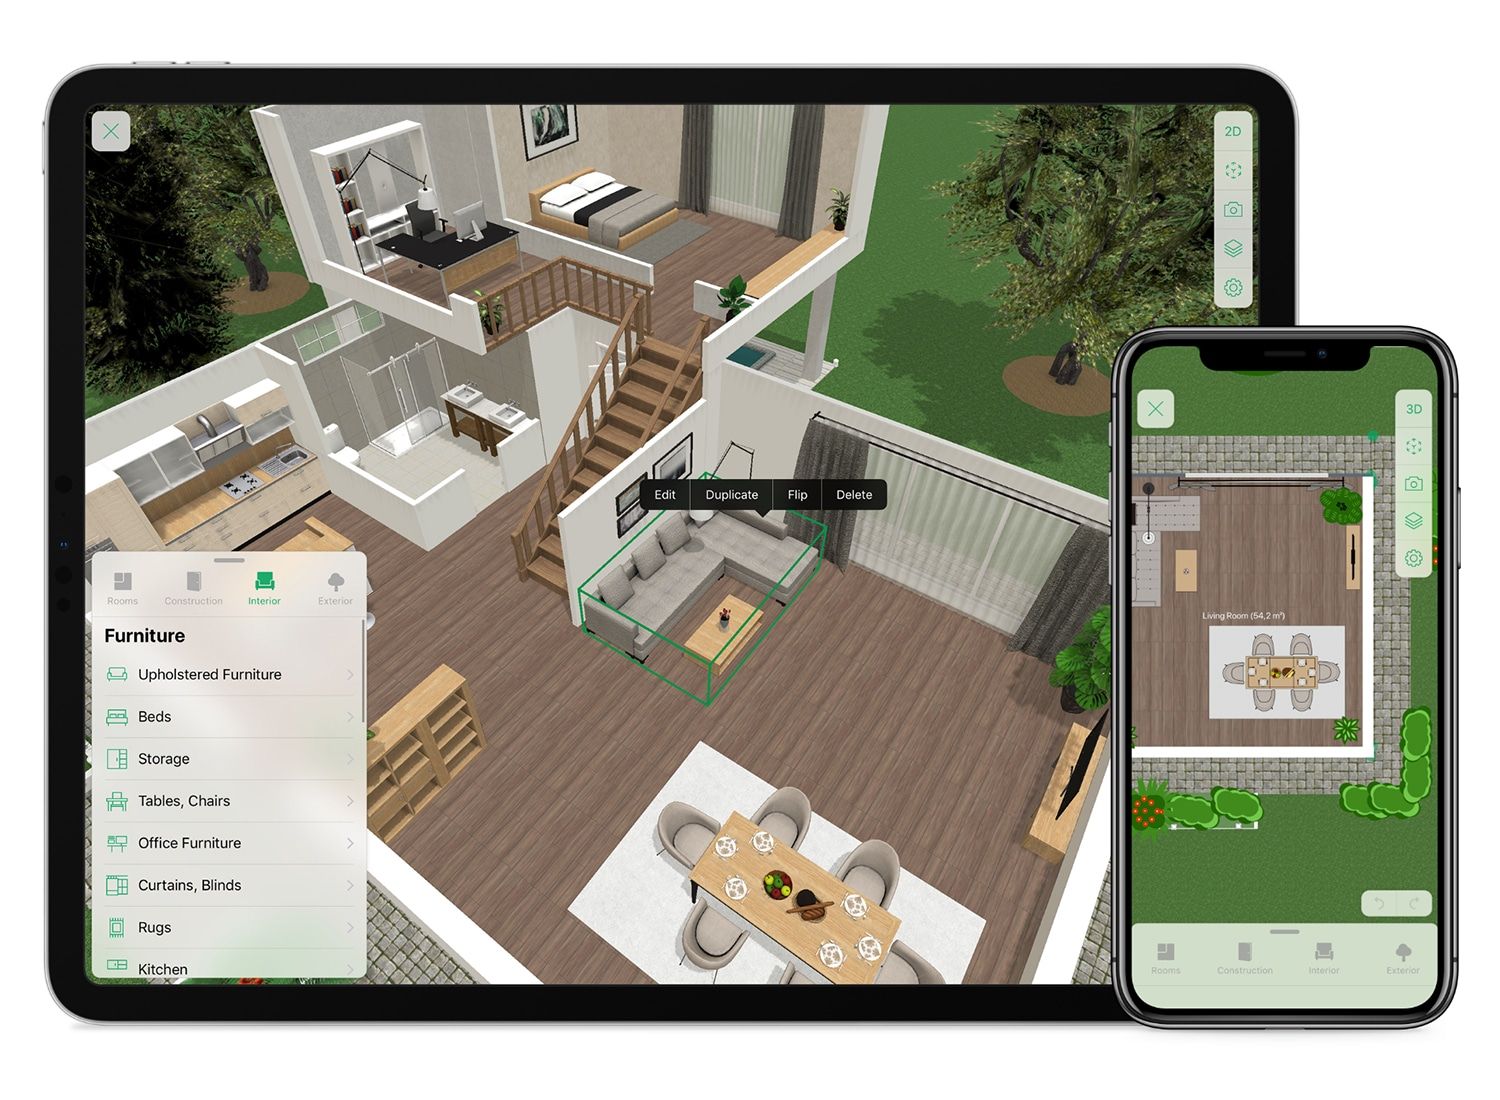 home design 3d app